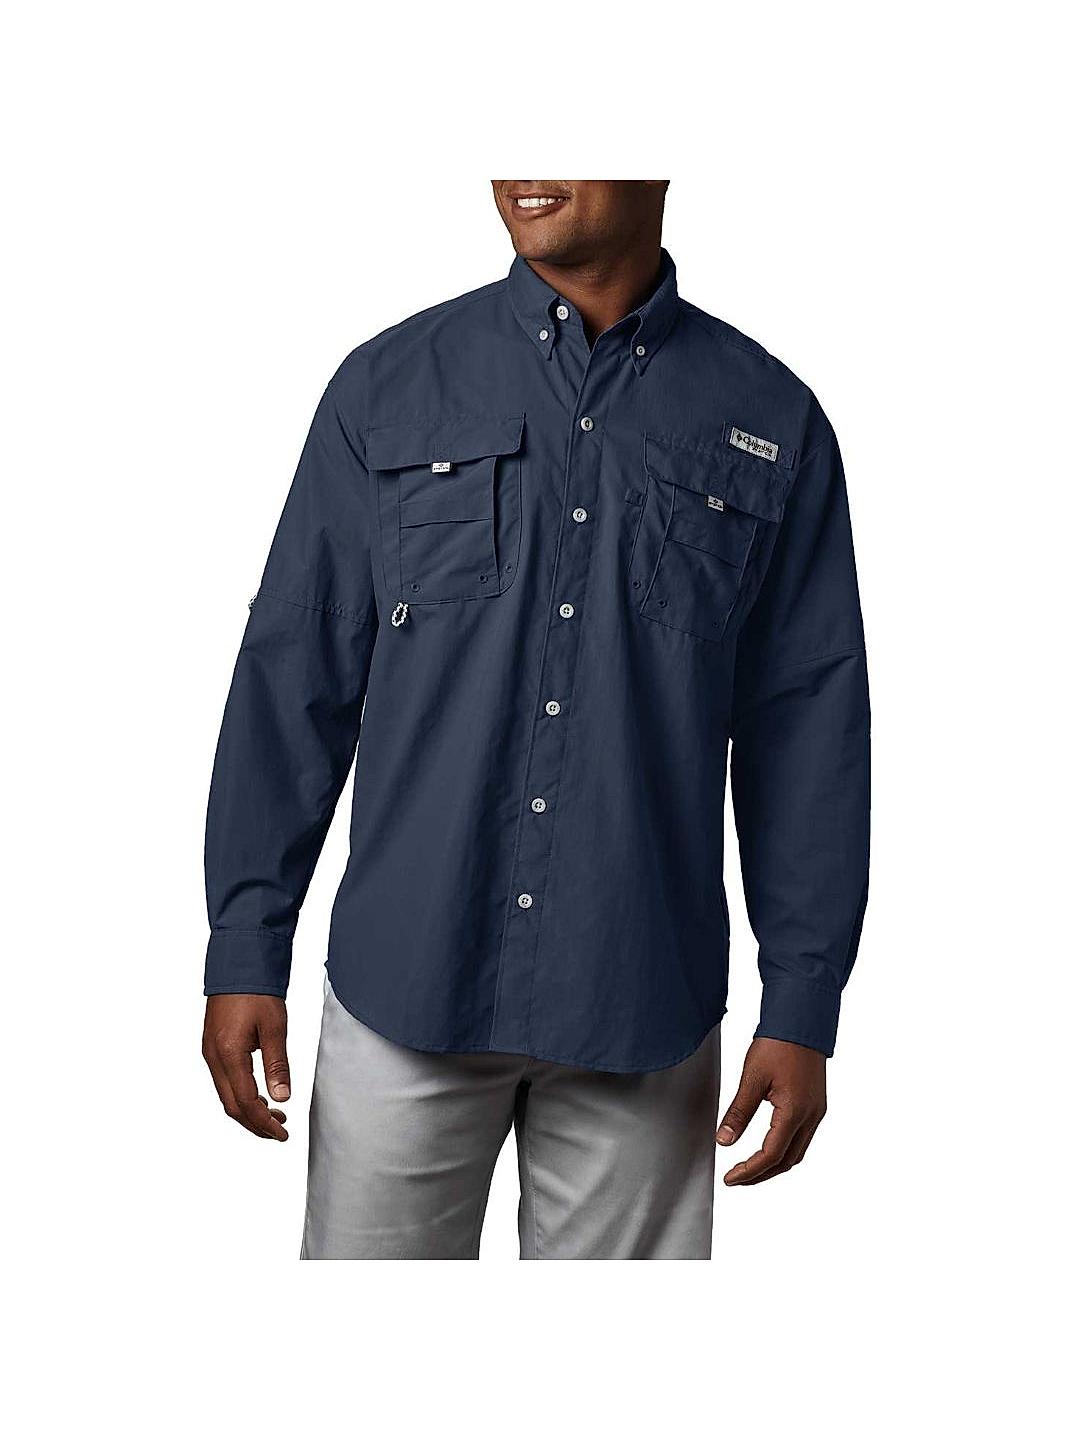 Buy Navy Bahama II L/S Shirt for Men Online at Columbia Sportswear